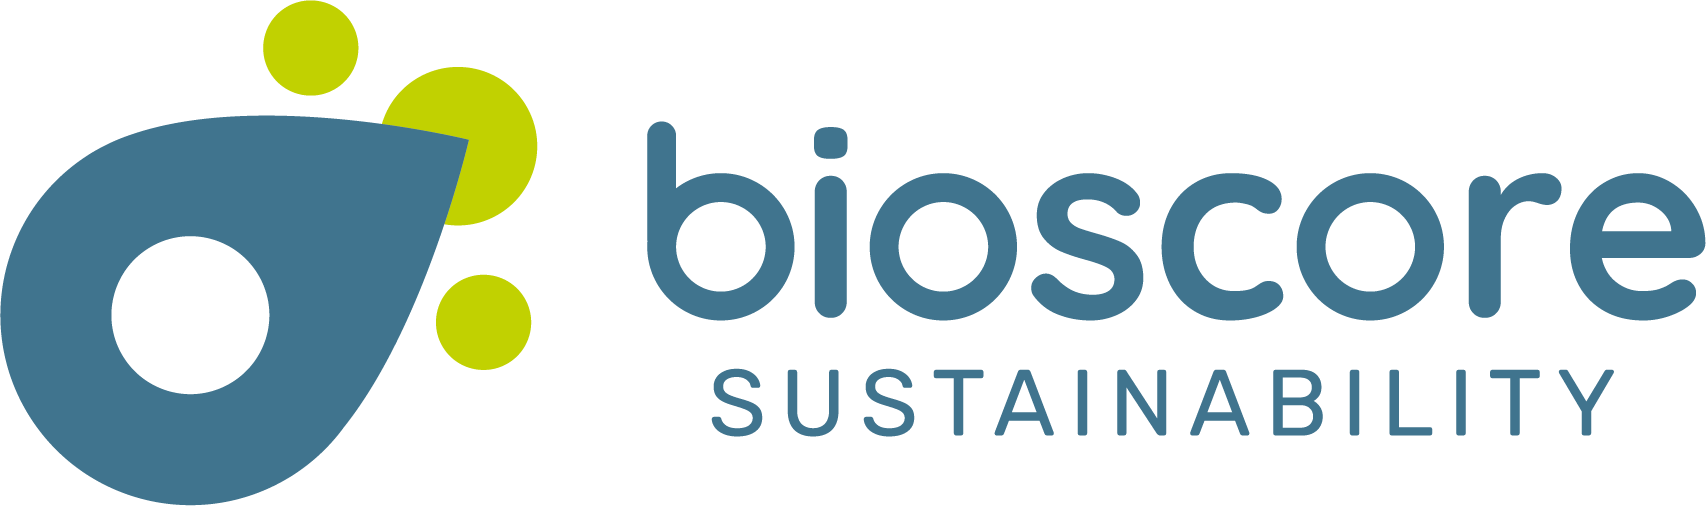 Certificat de durabilité Bioscore